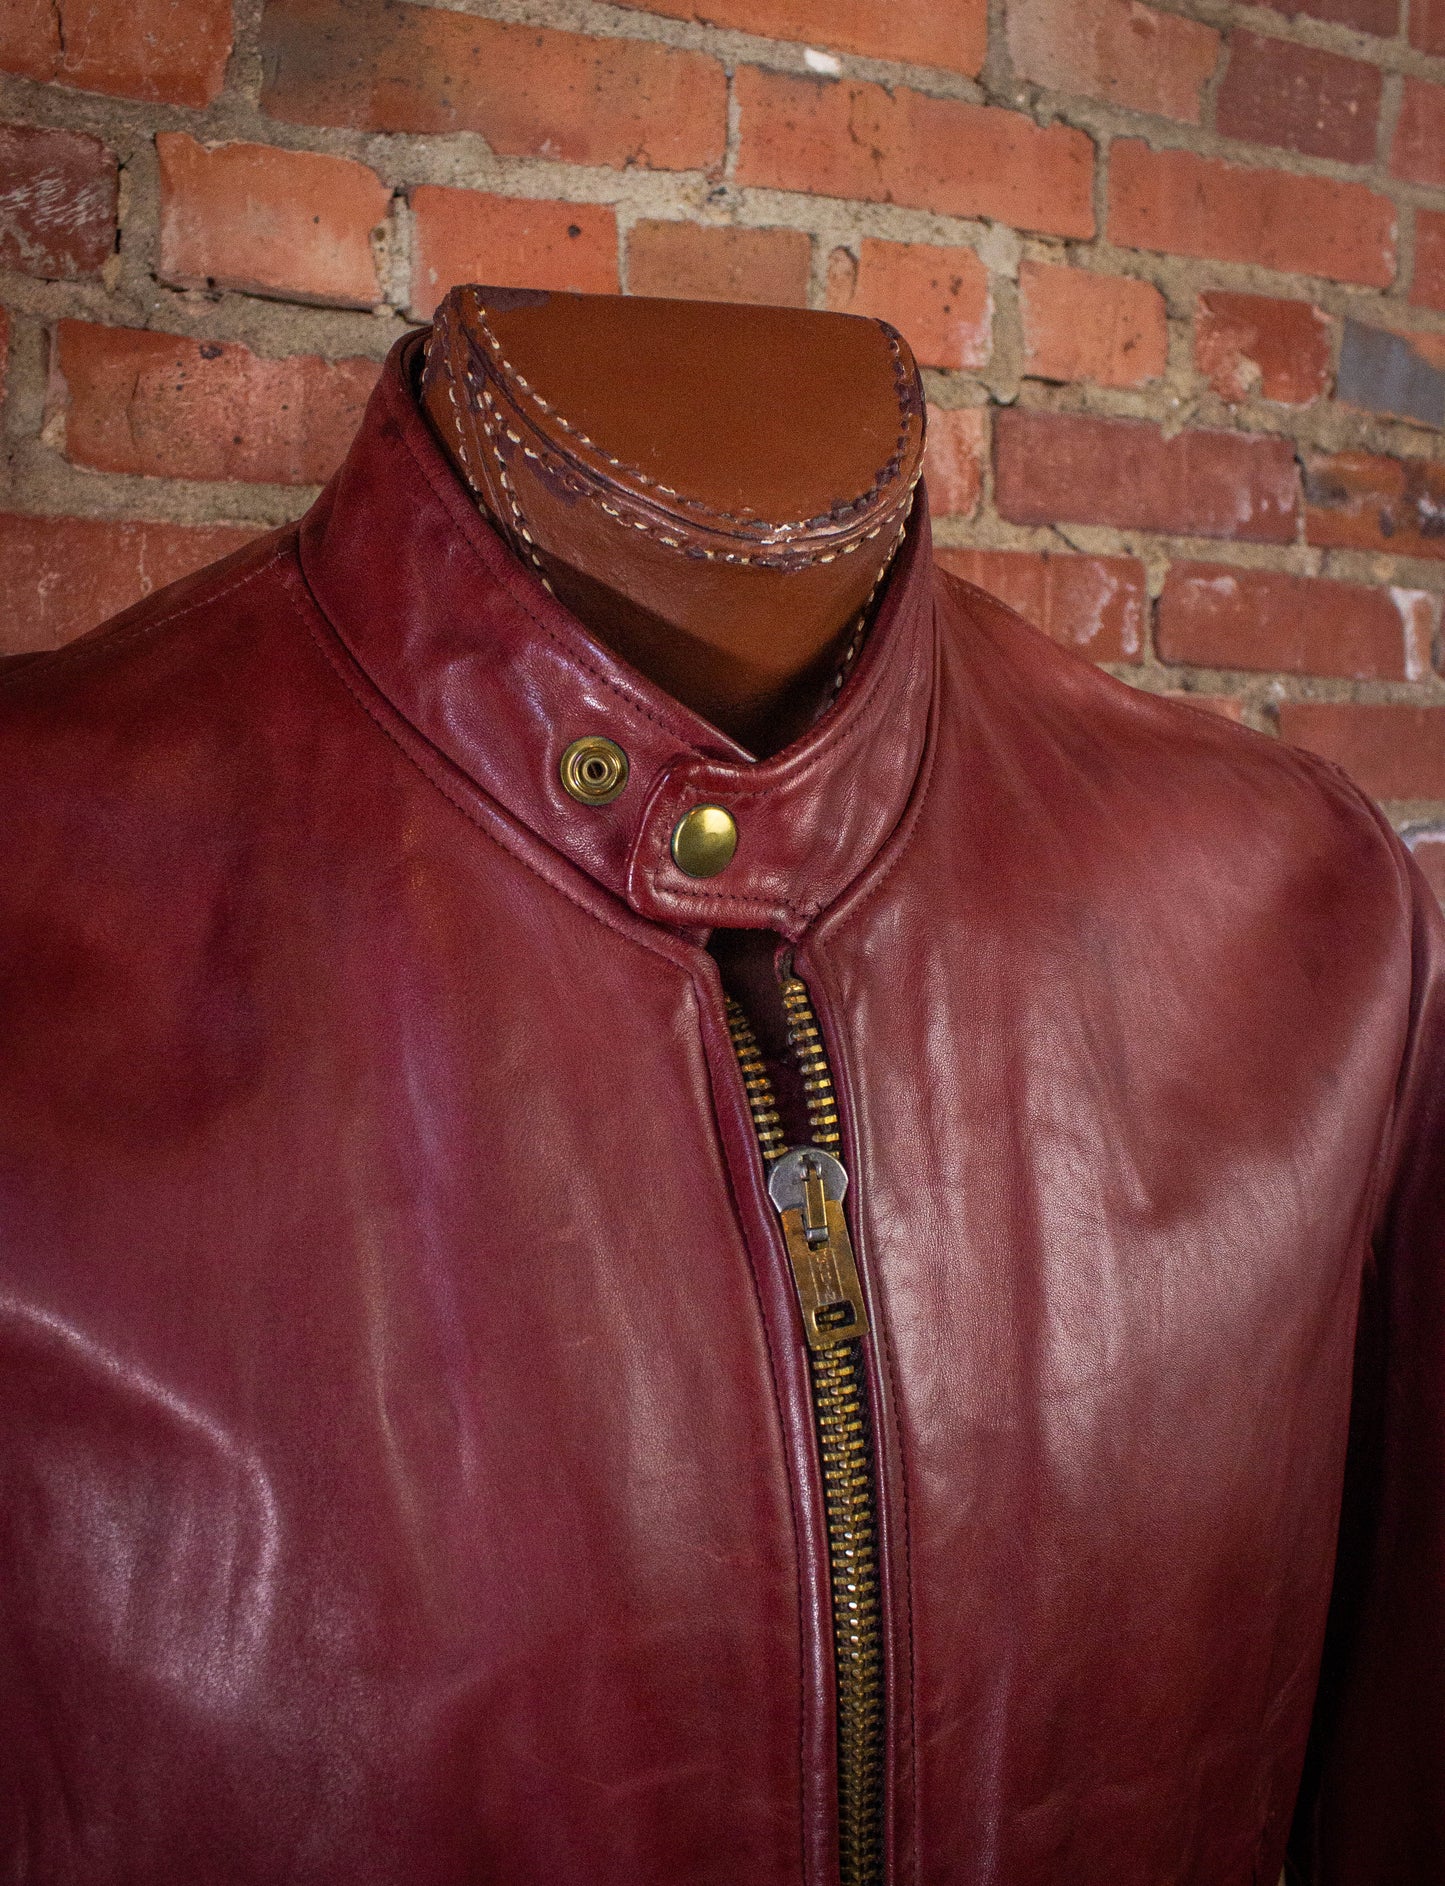 Vintage Rusty Red Cafe Racer Leather Jacket Medium/Large